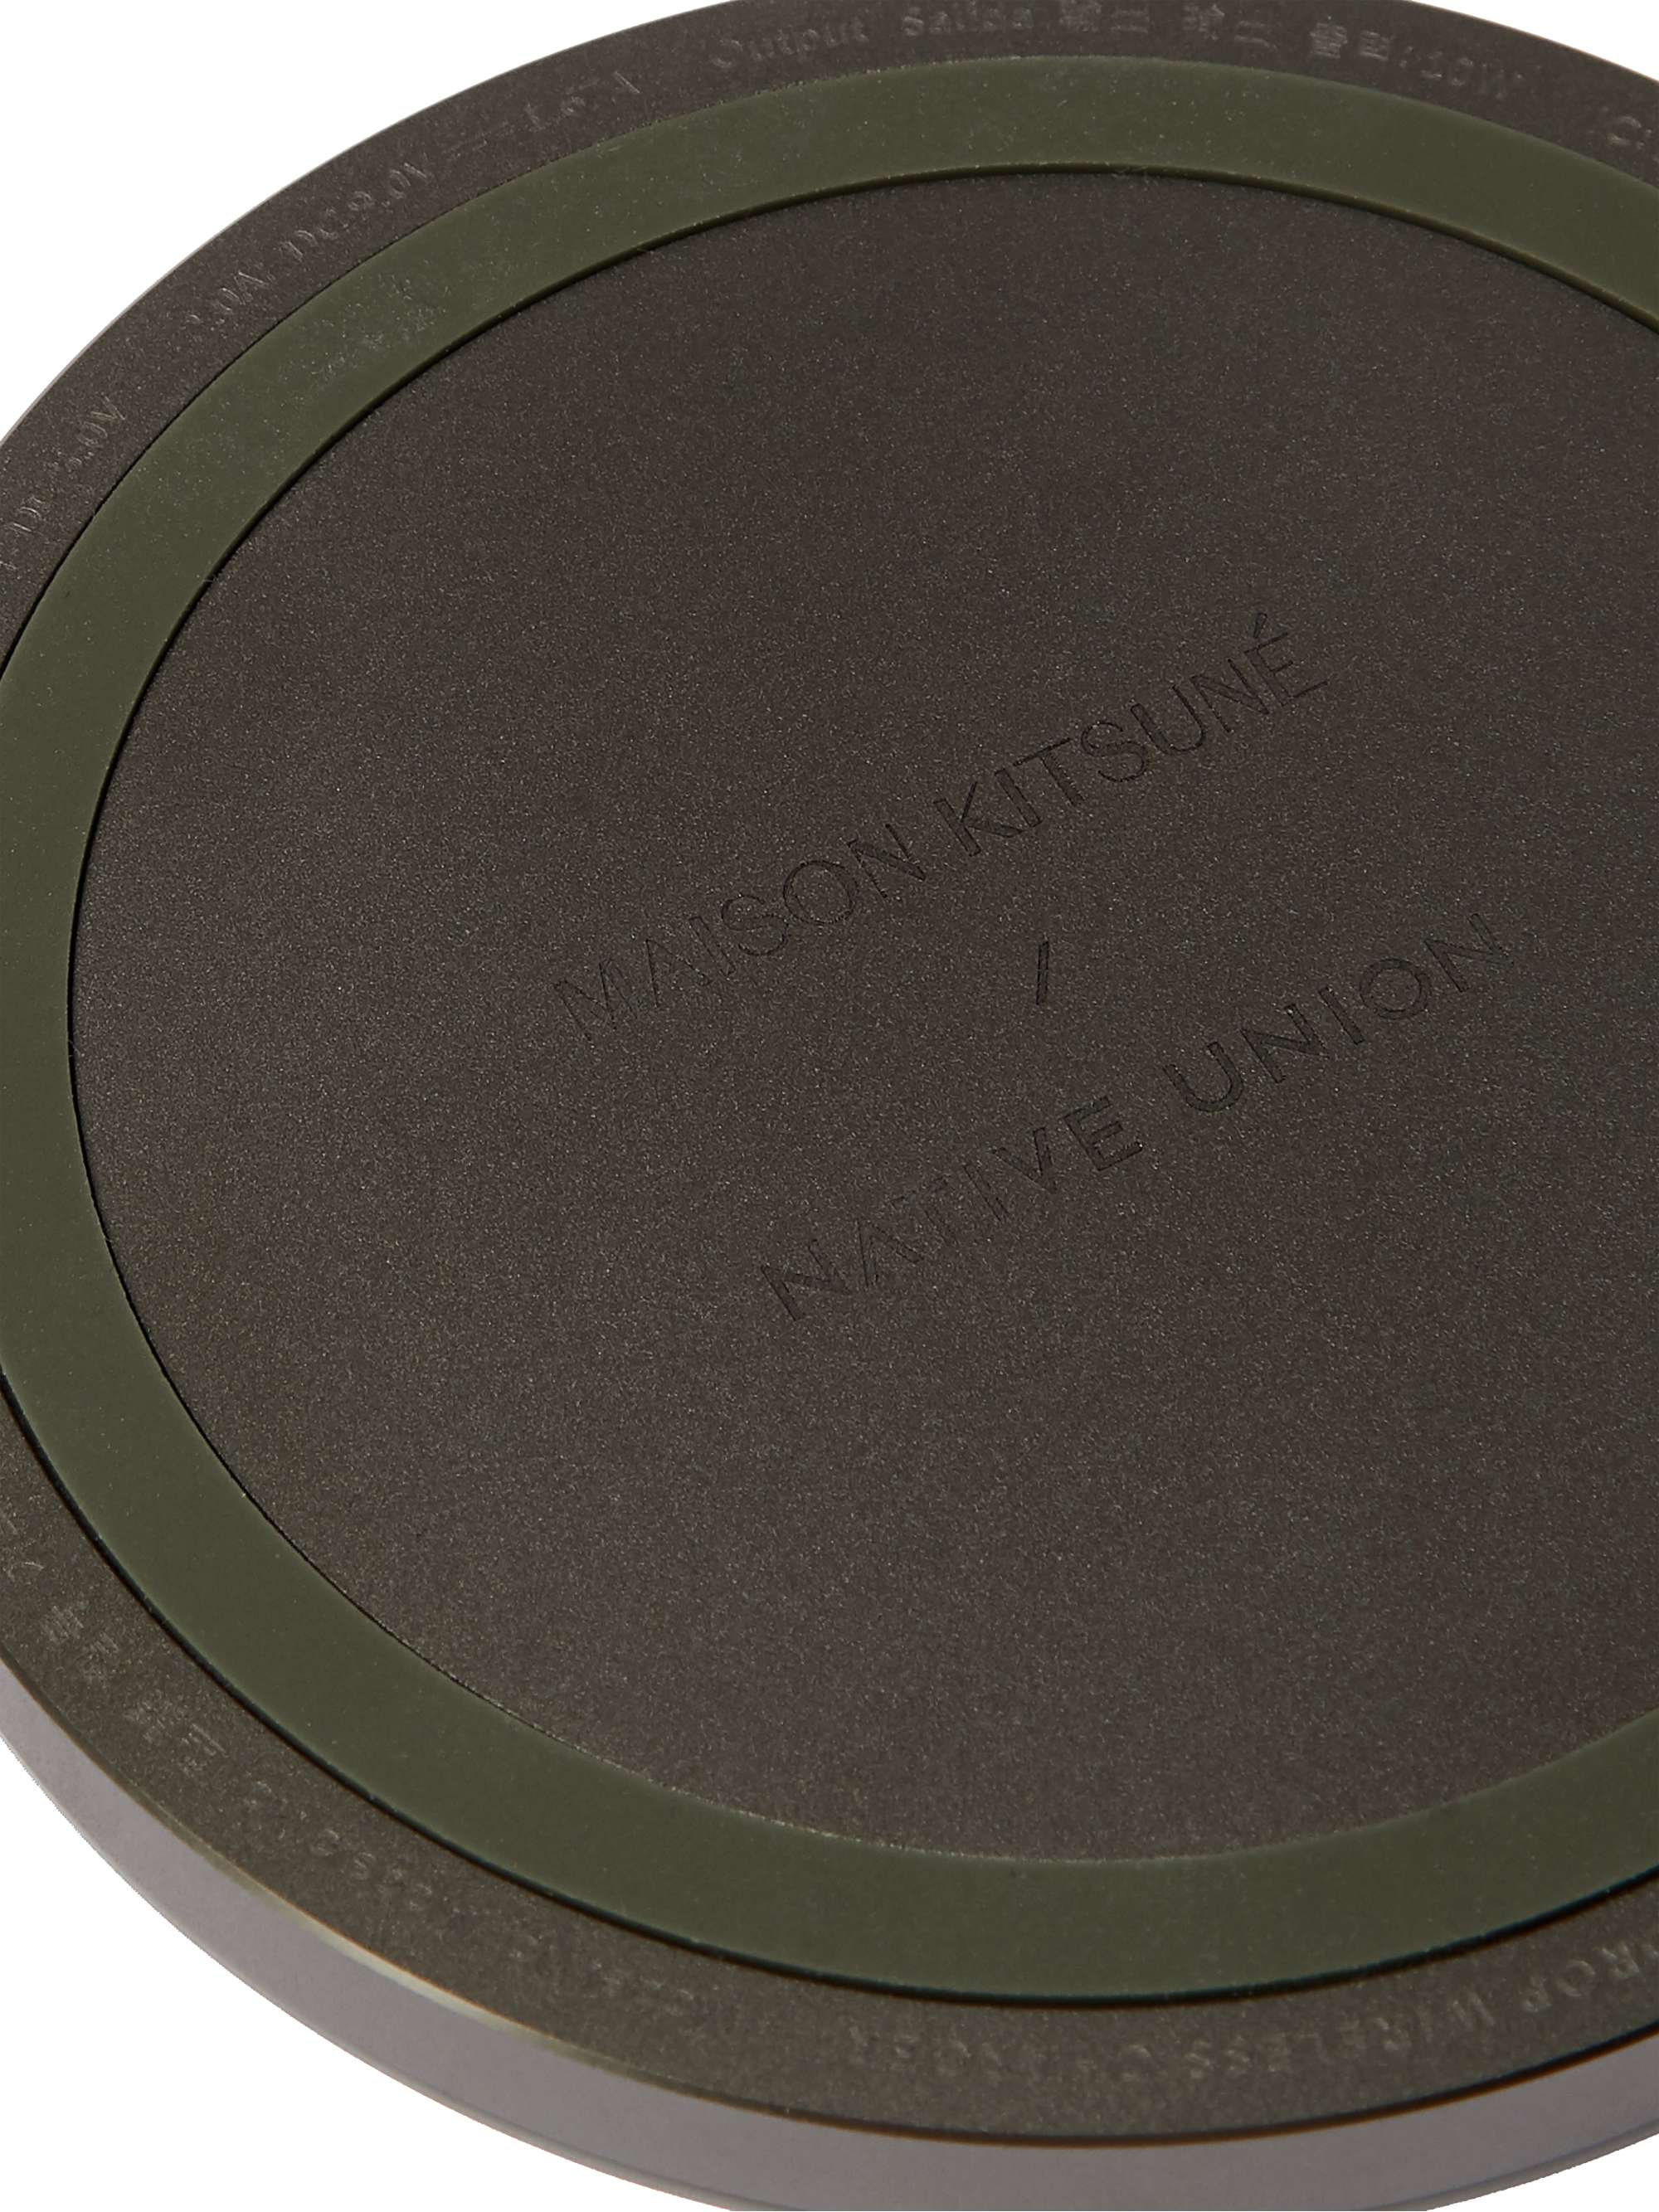 NATIVE UNION + Maison Kitsuné Drop Logo-Detailed Wireless Charger